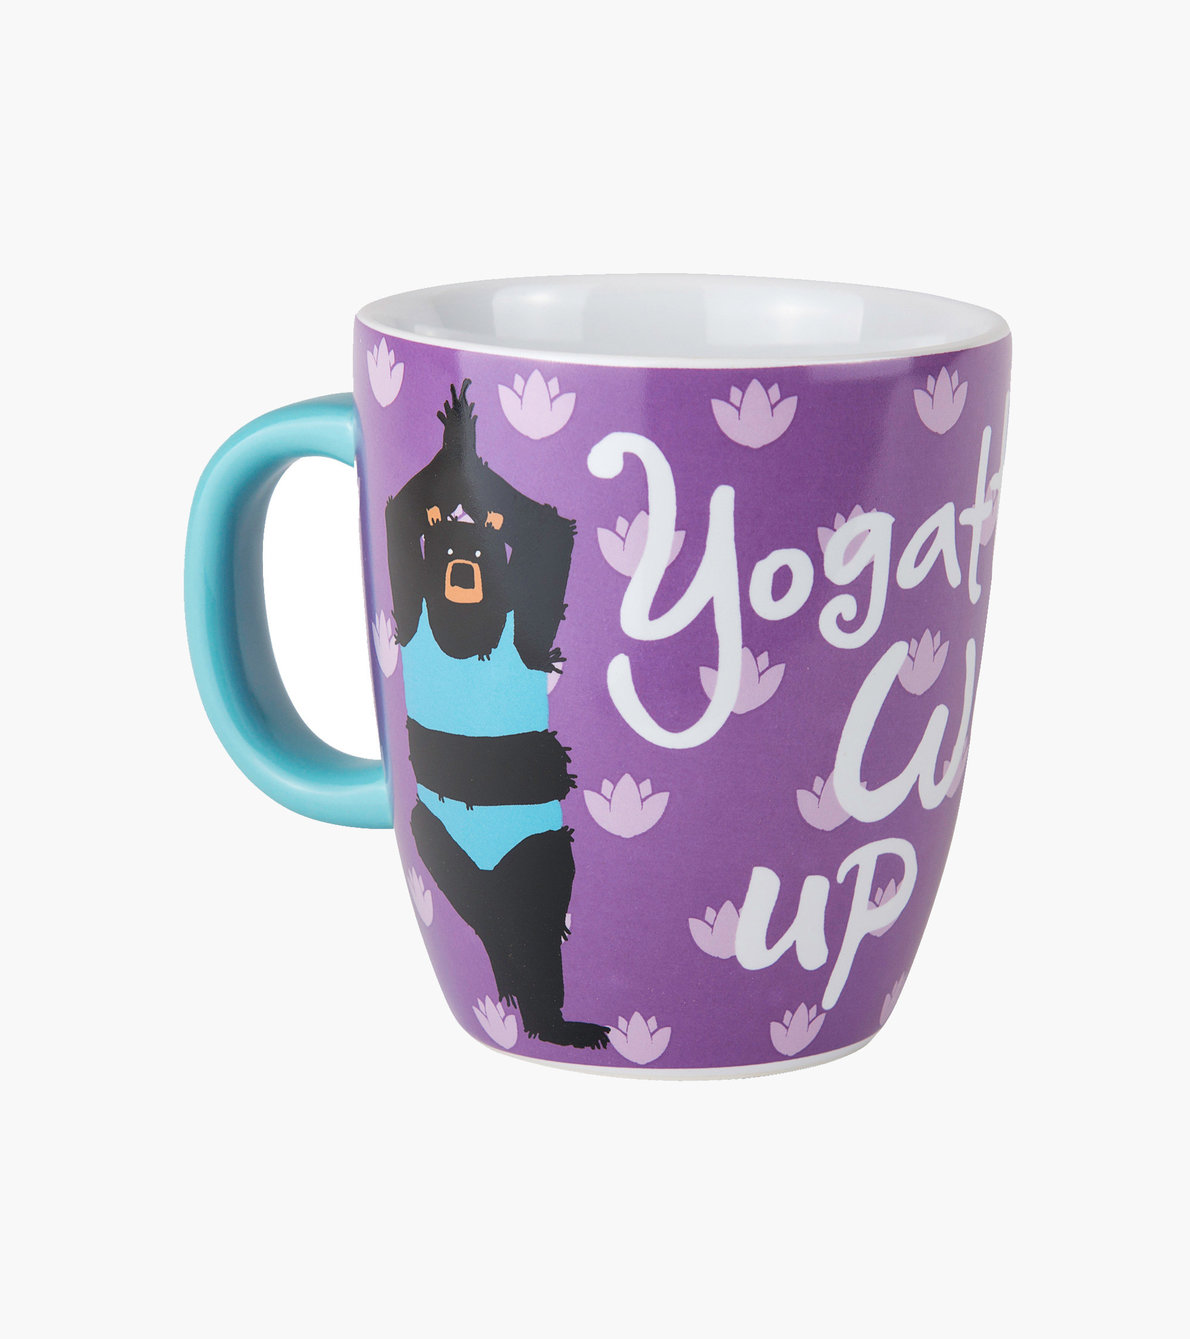 View larger image of Yogatta Wake Up Curved Ceramic Mug